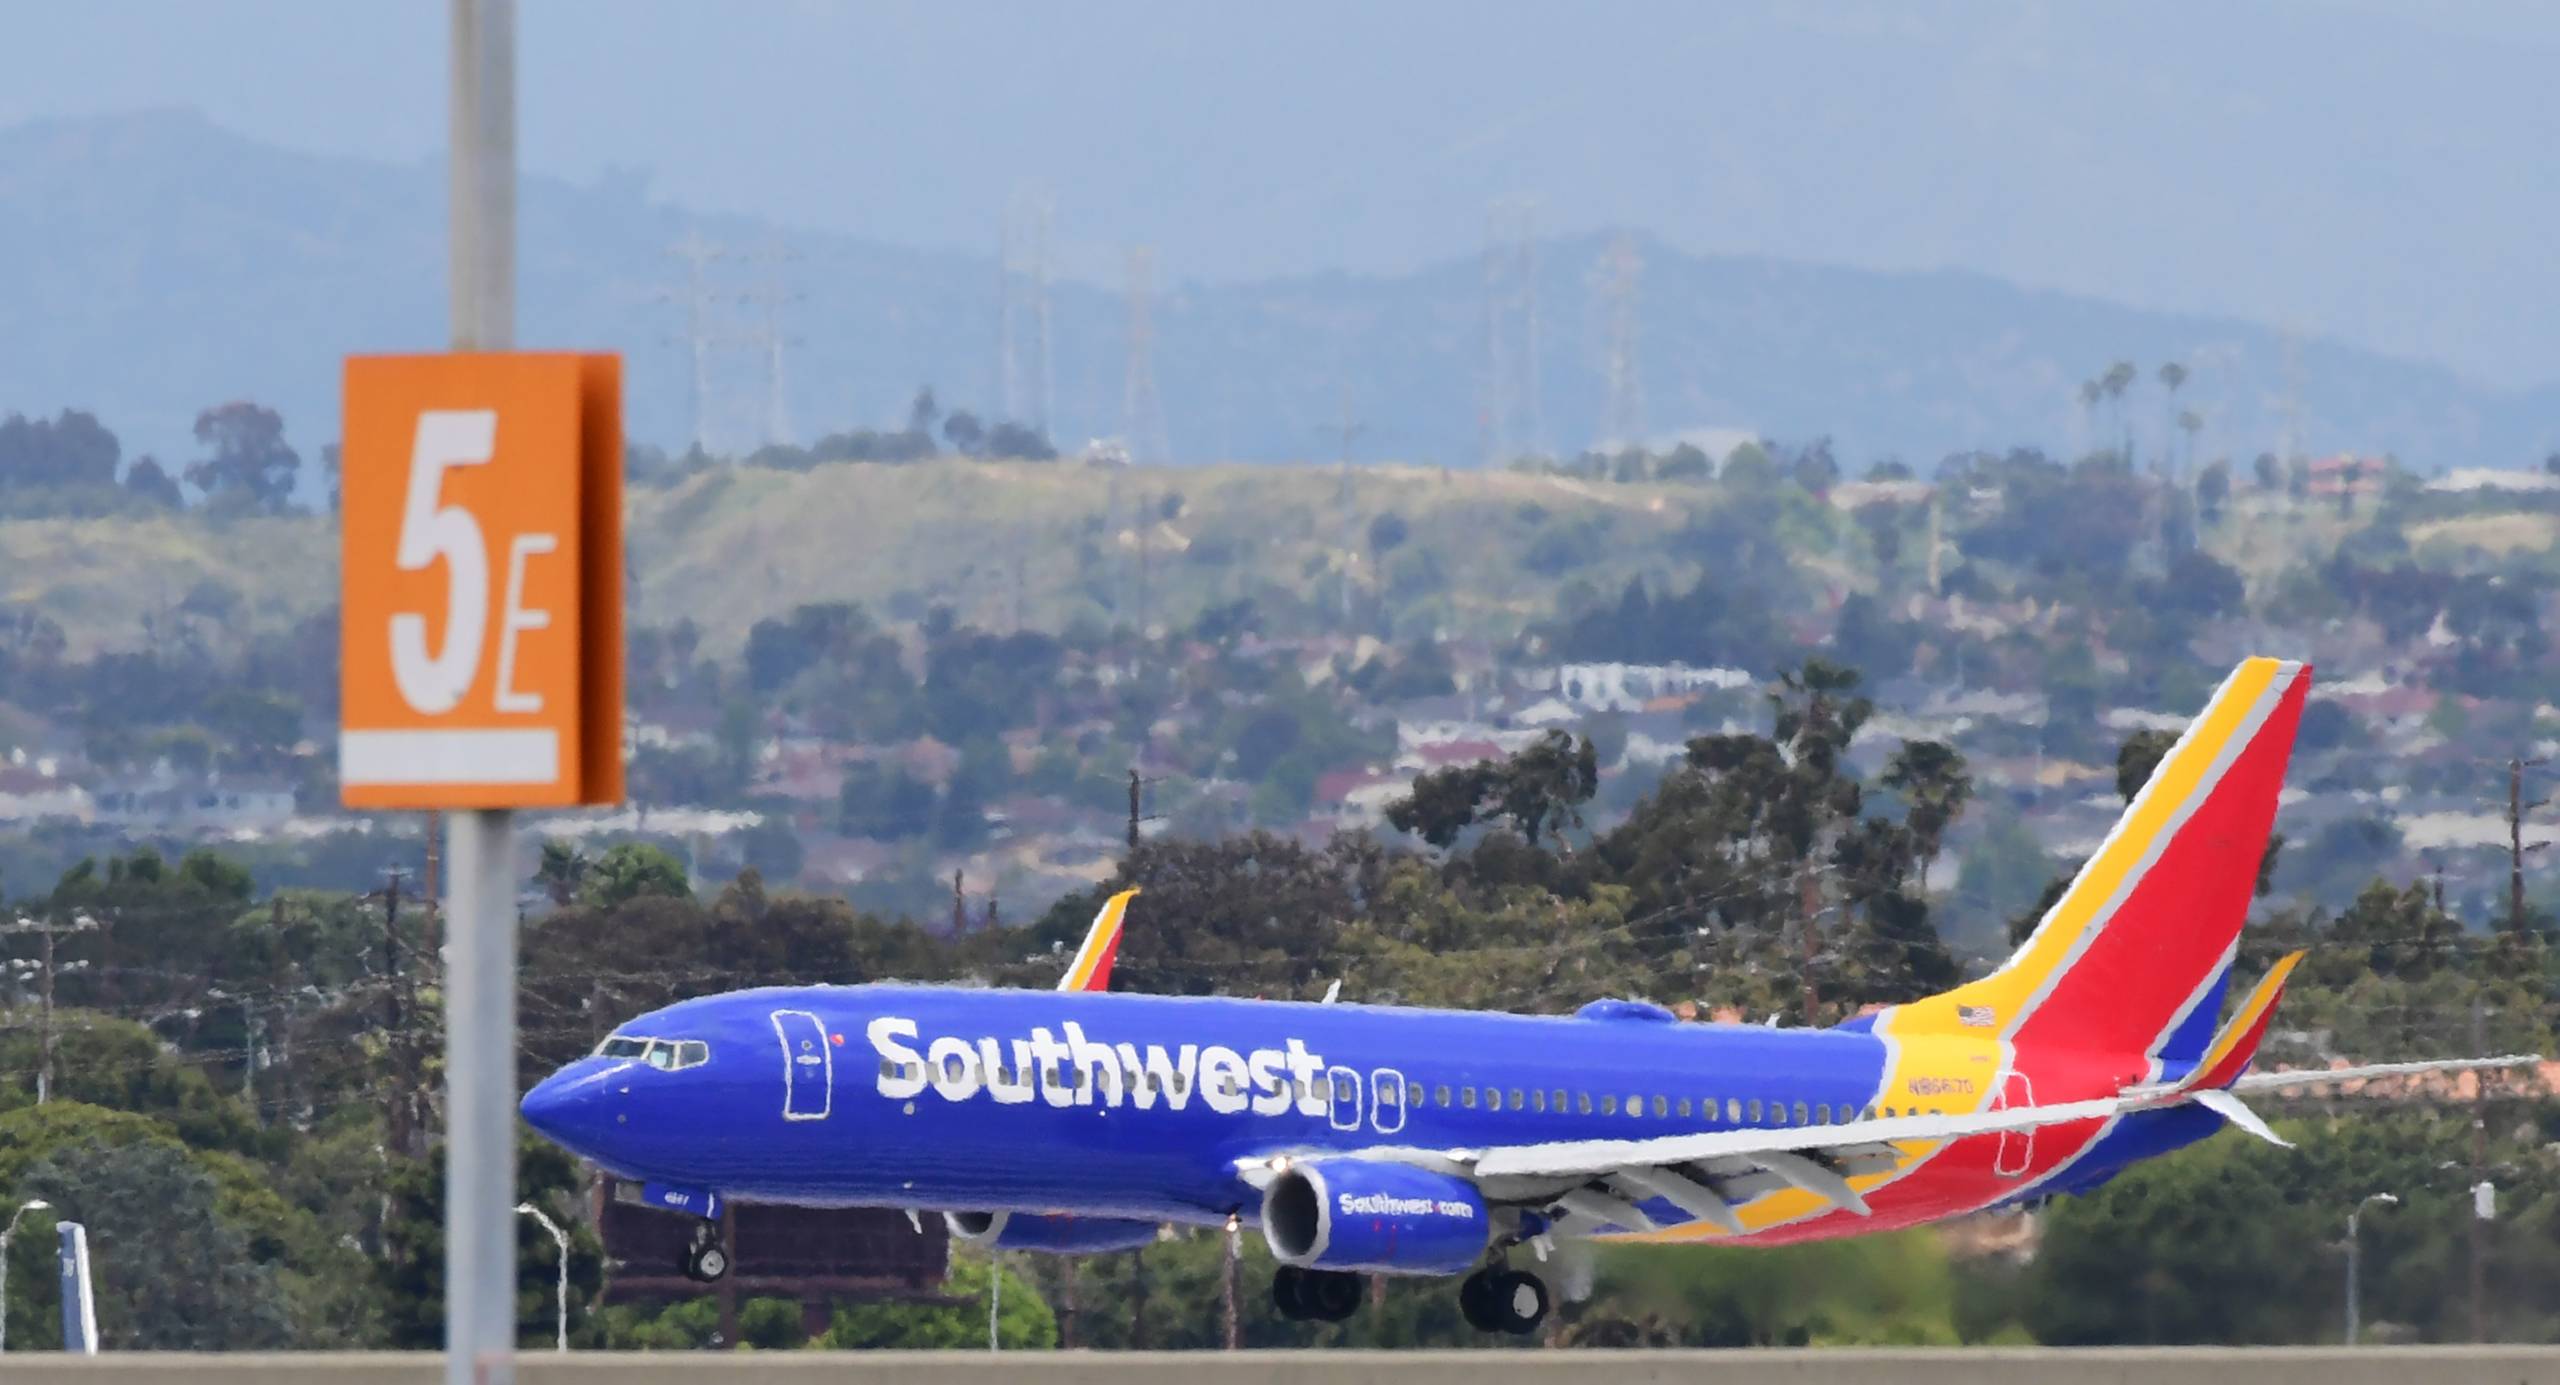 southwest airlines sale $69